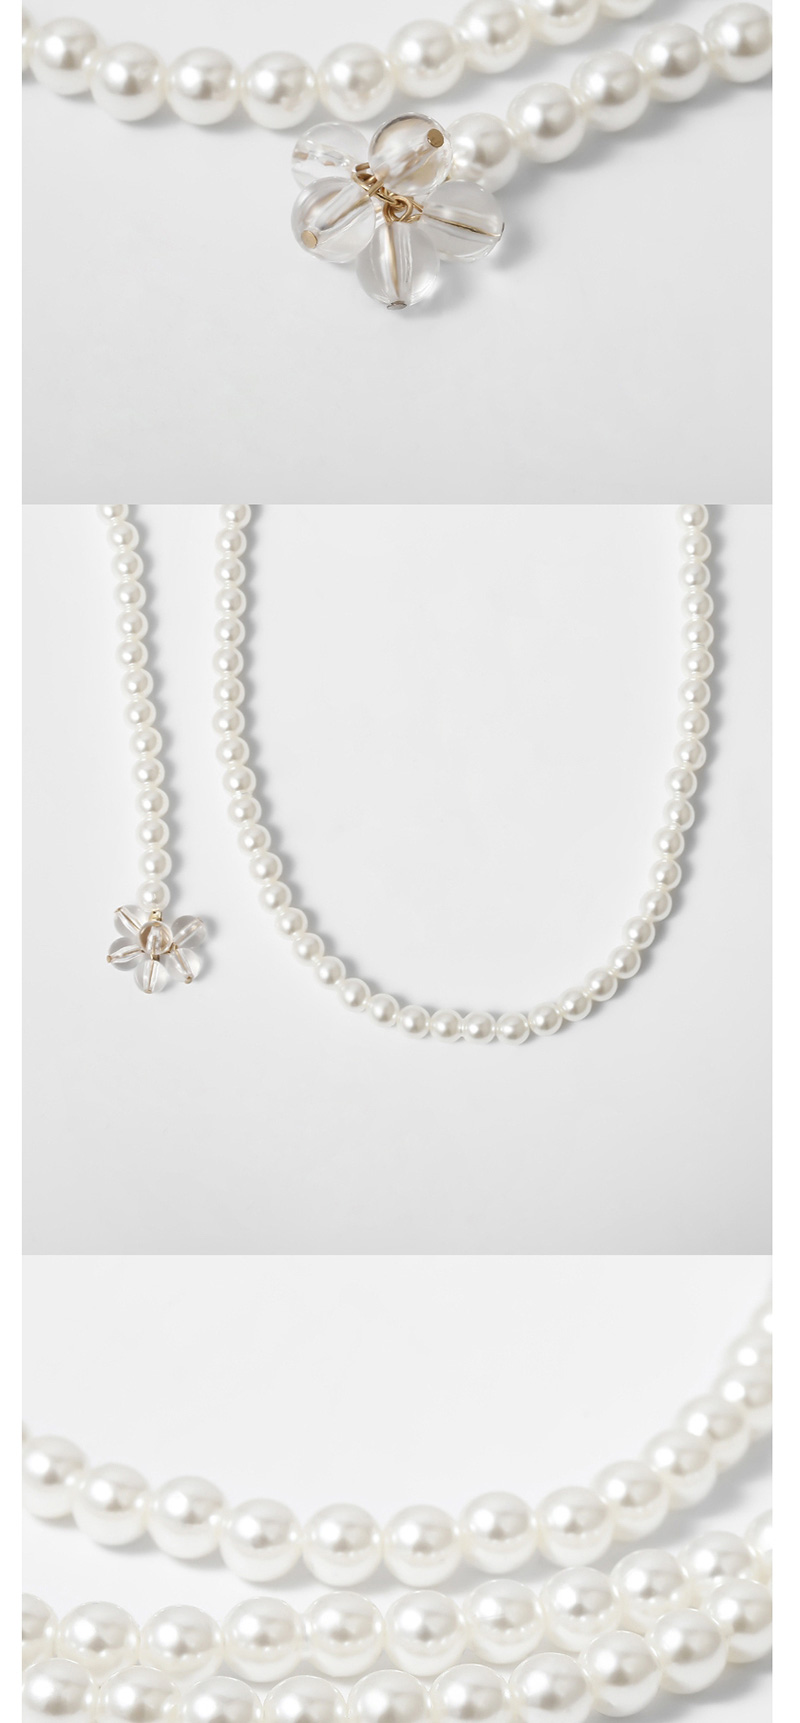 Fashion Golden Alloy Chain Waist Chain,Body Piercing Jewelry